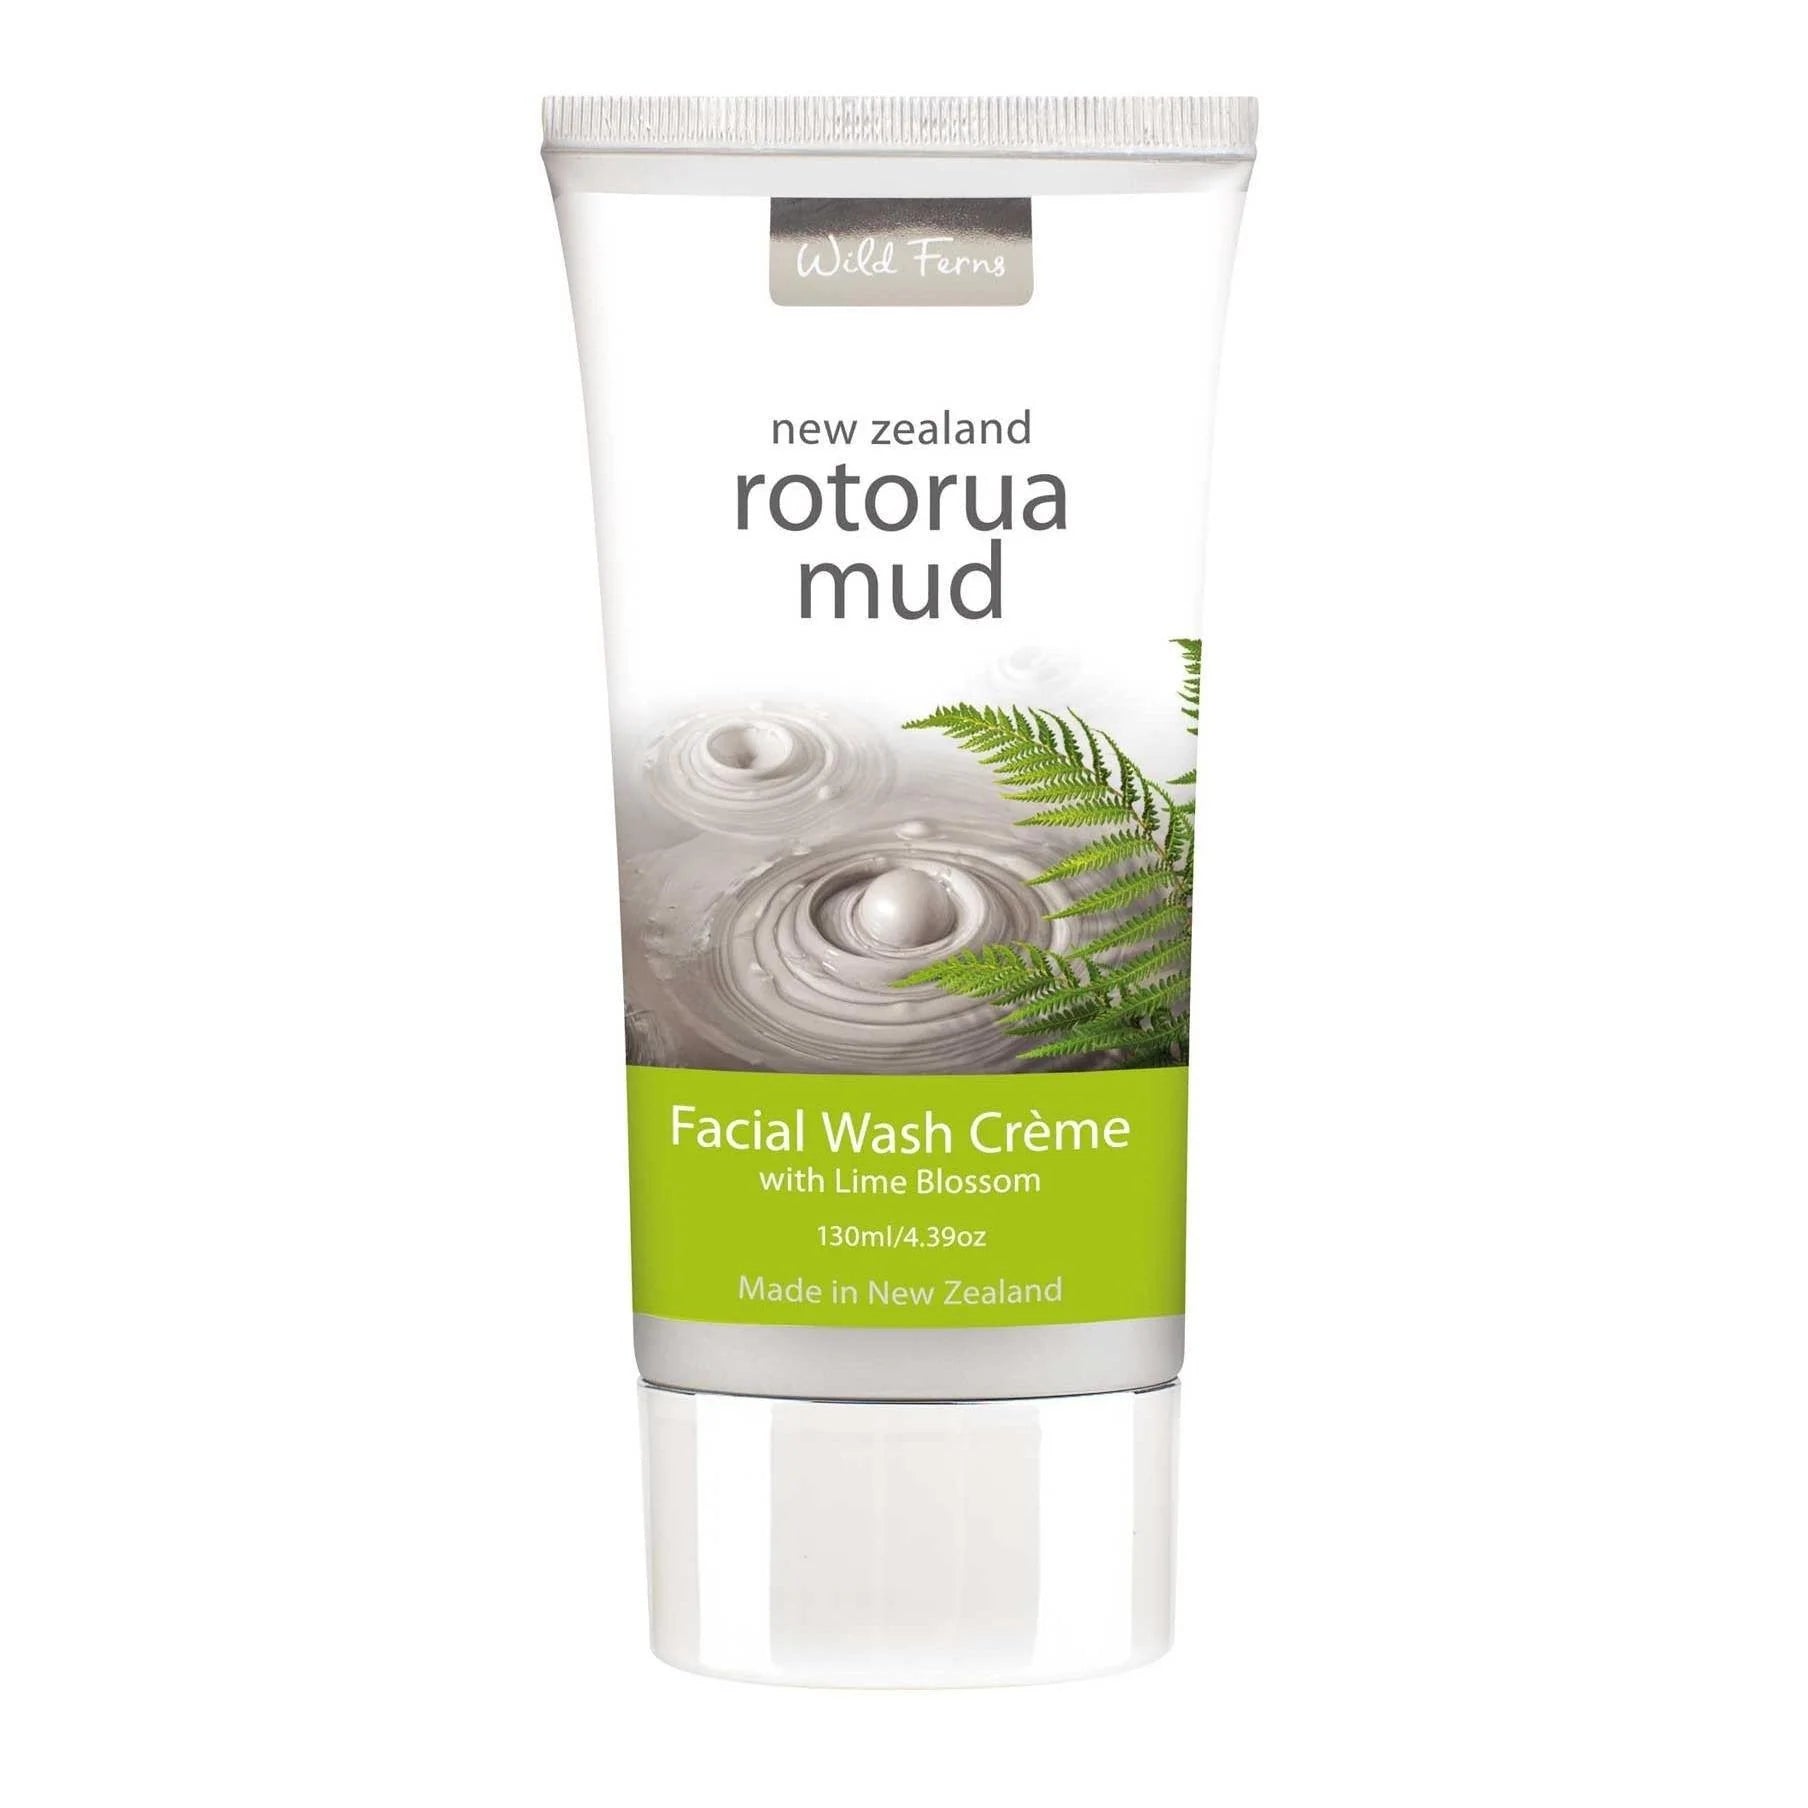 Wild Ferns Rotorua Mud Facial Wash Creme with Lime Blossom 130ml